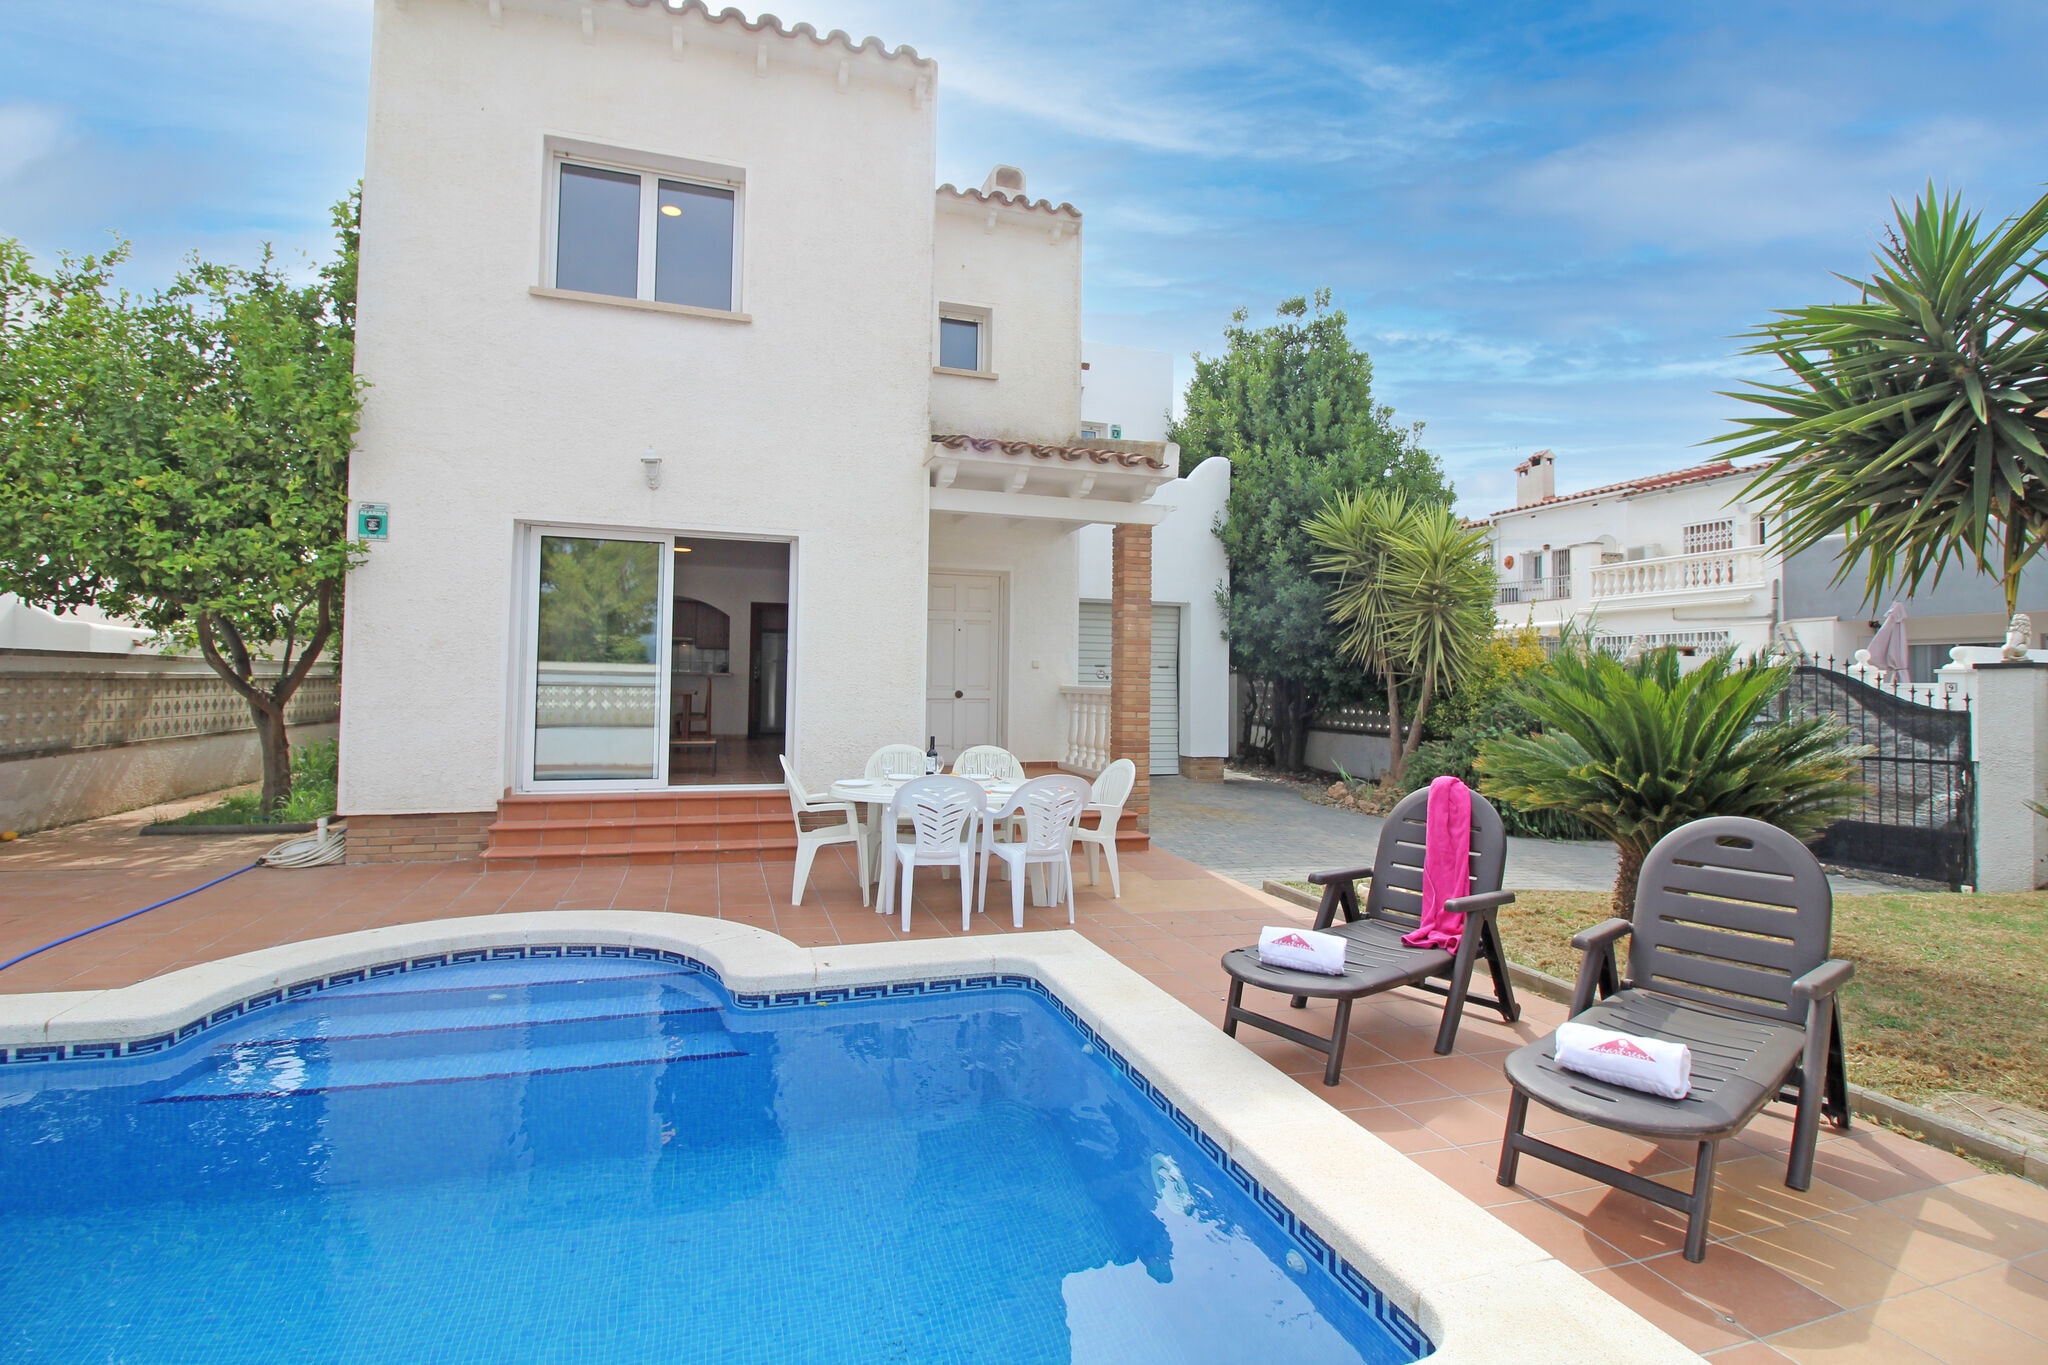 Maison de vacances moderne avec piscine privée à Empuriabrava, Espagne